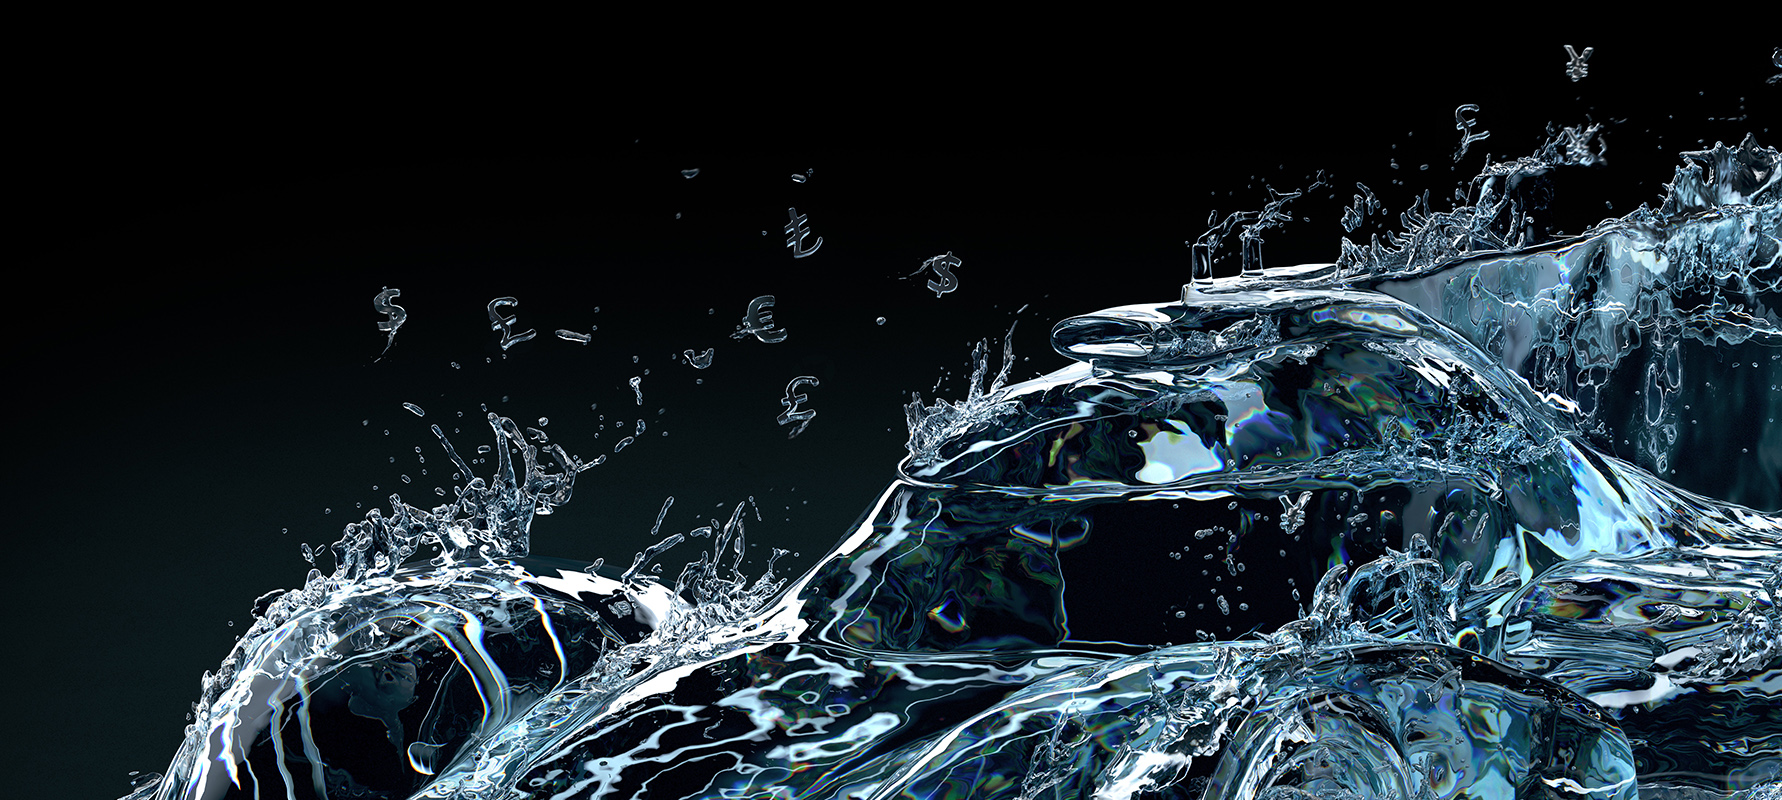 water car image